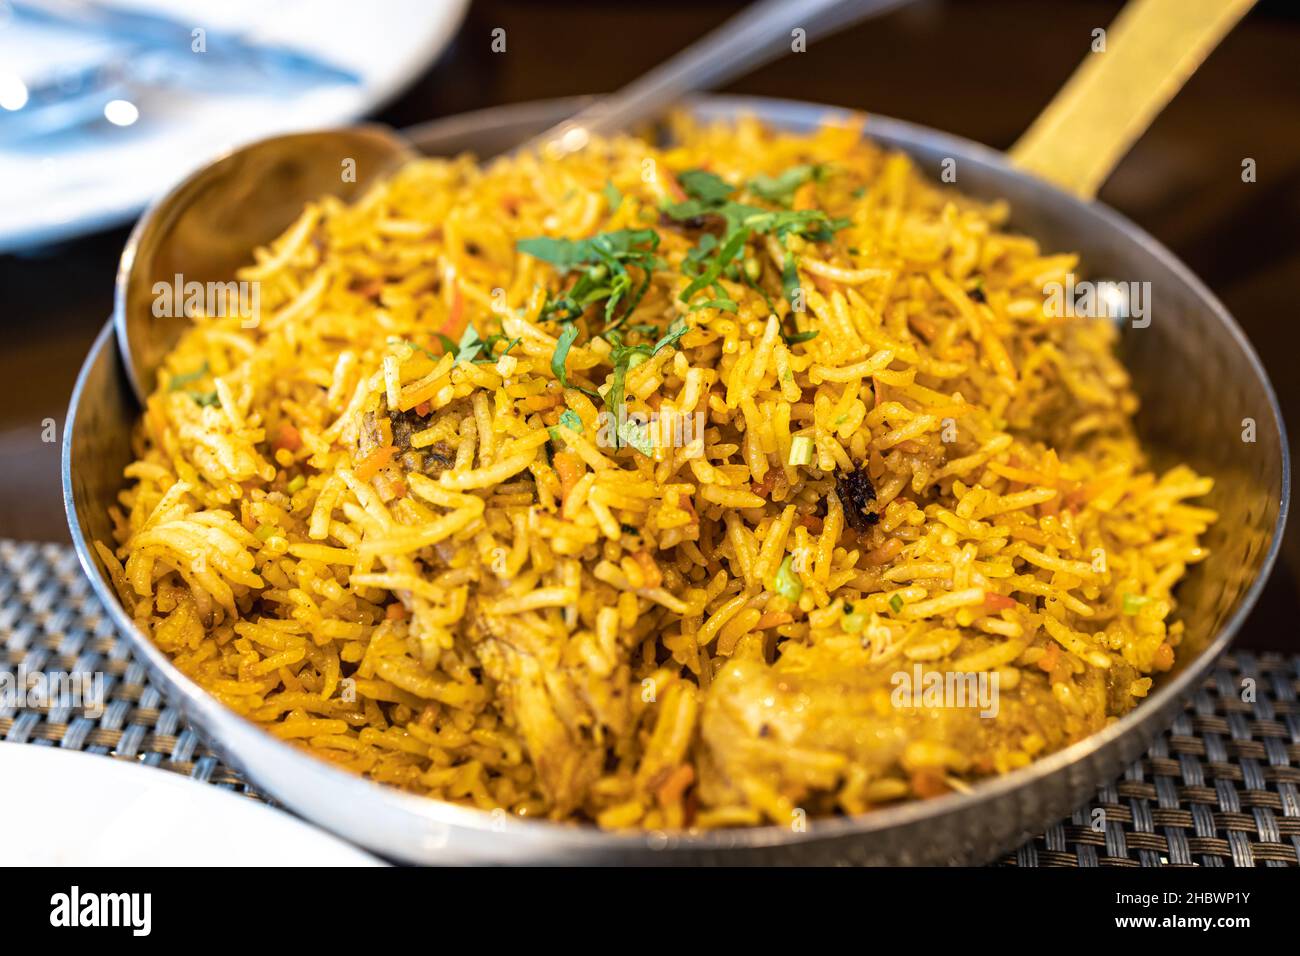 Popular India Food Mughlai Biryani In The Restaurant Stock Photo Alamy